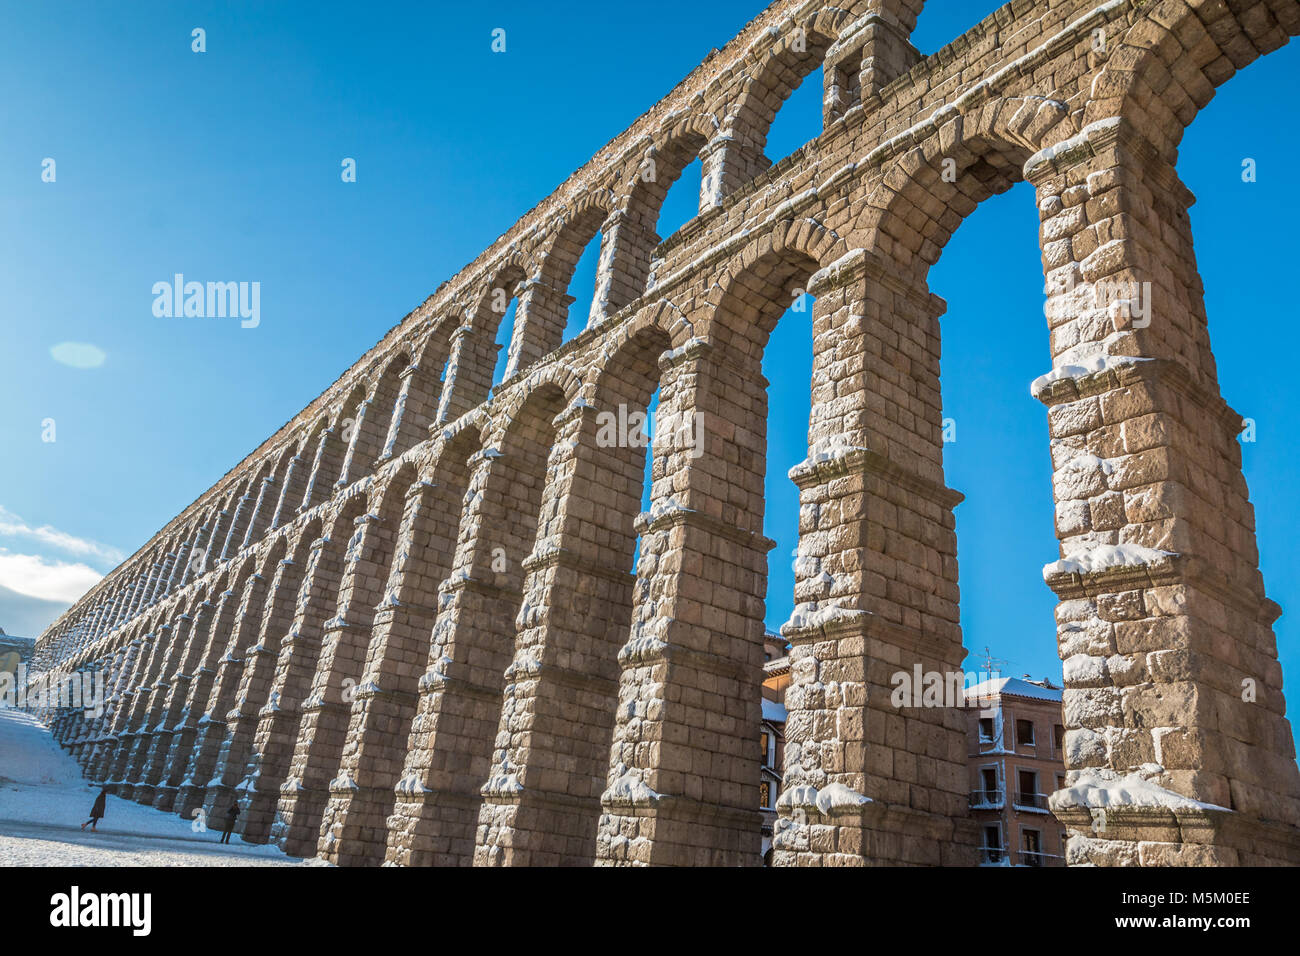 The Old Roman Aqueduct in Segovia Spain Stock Photo